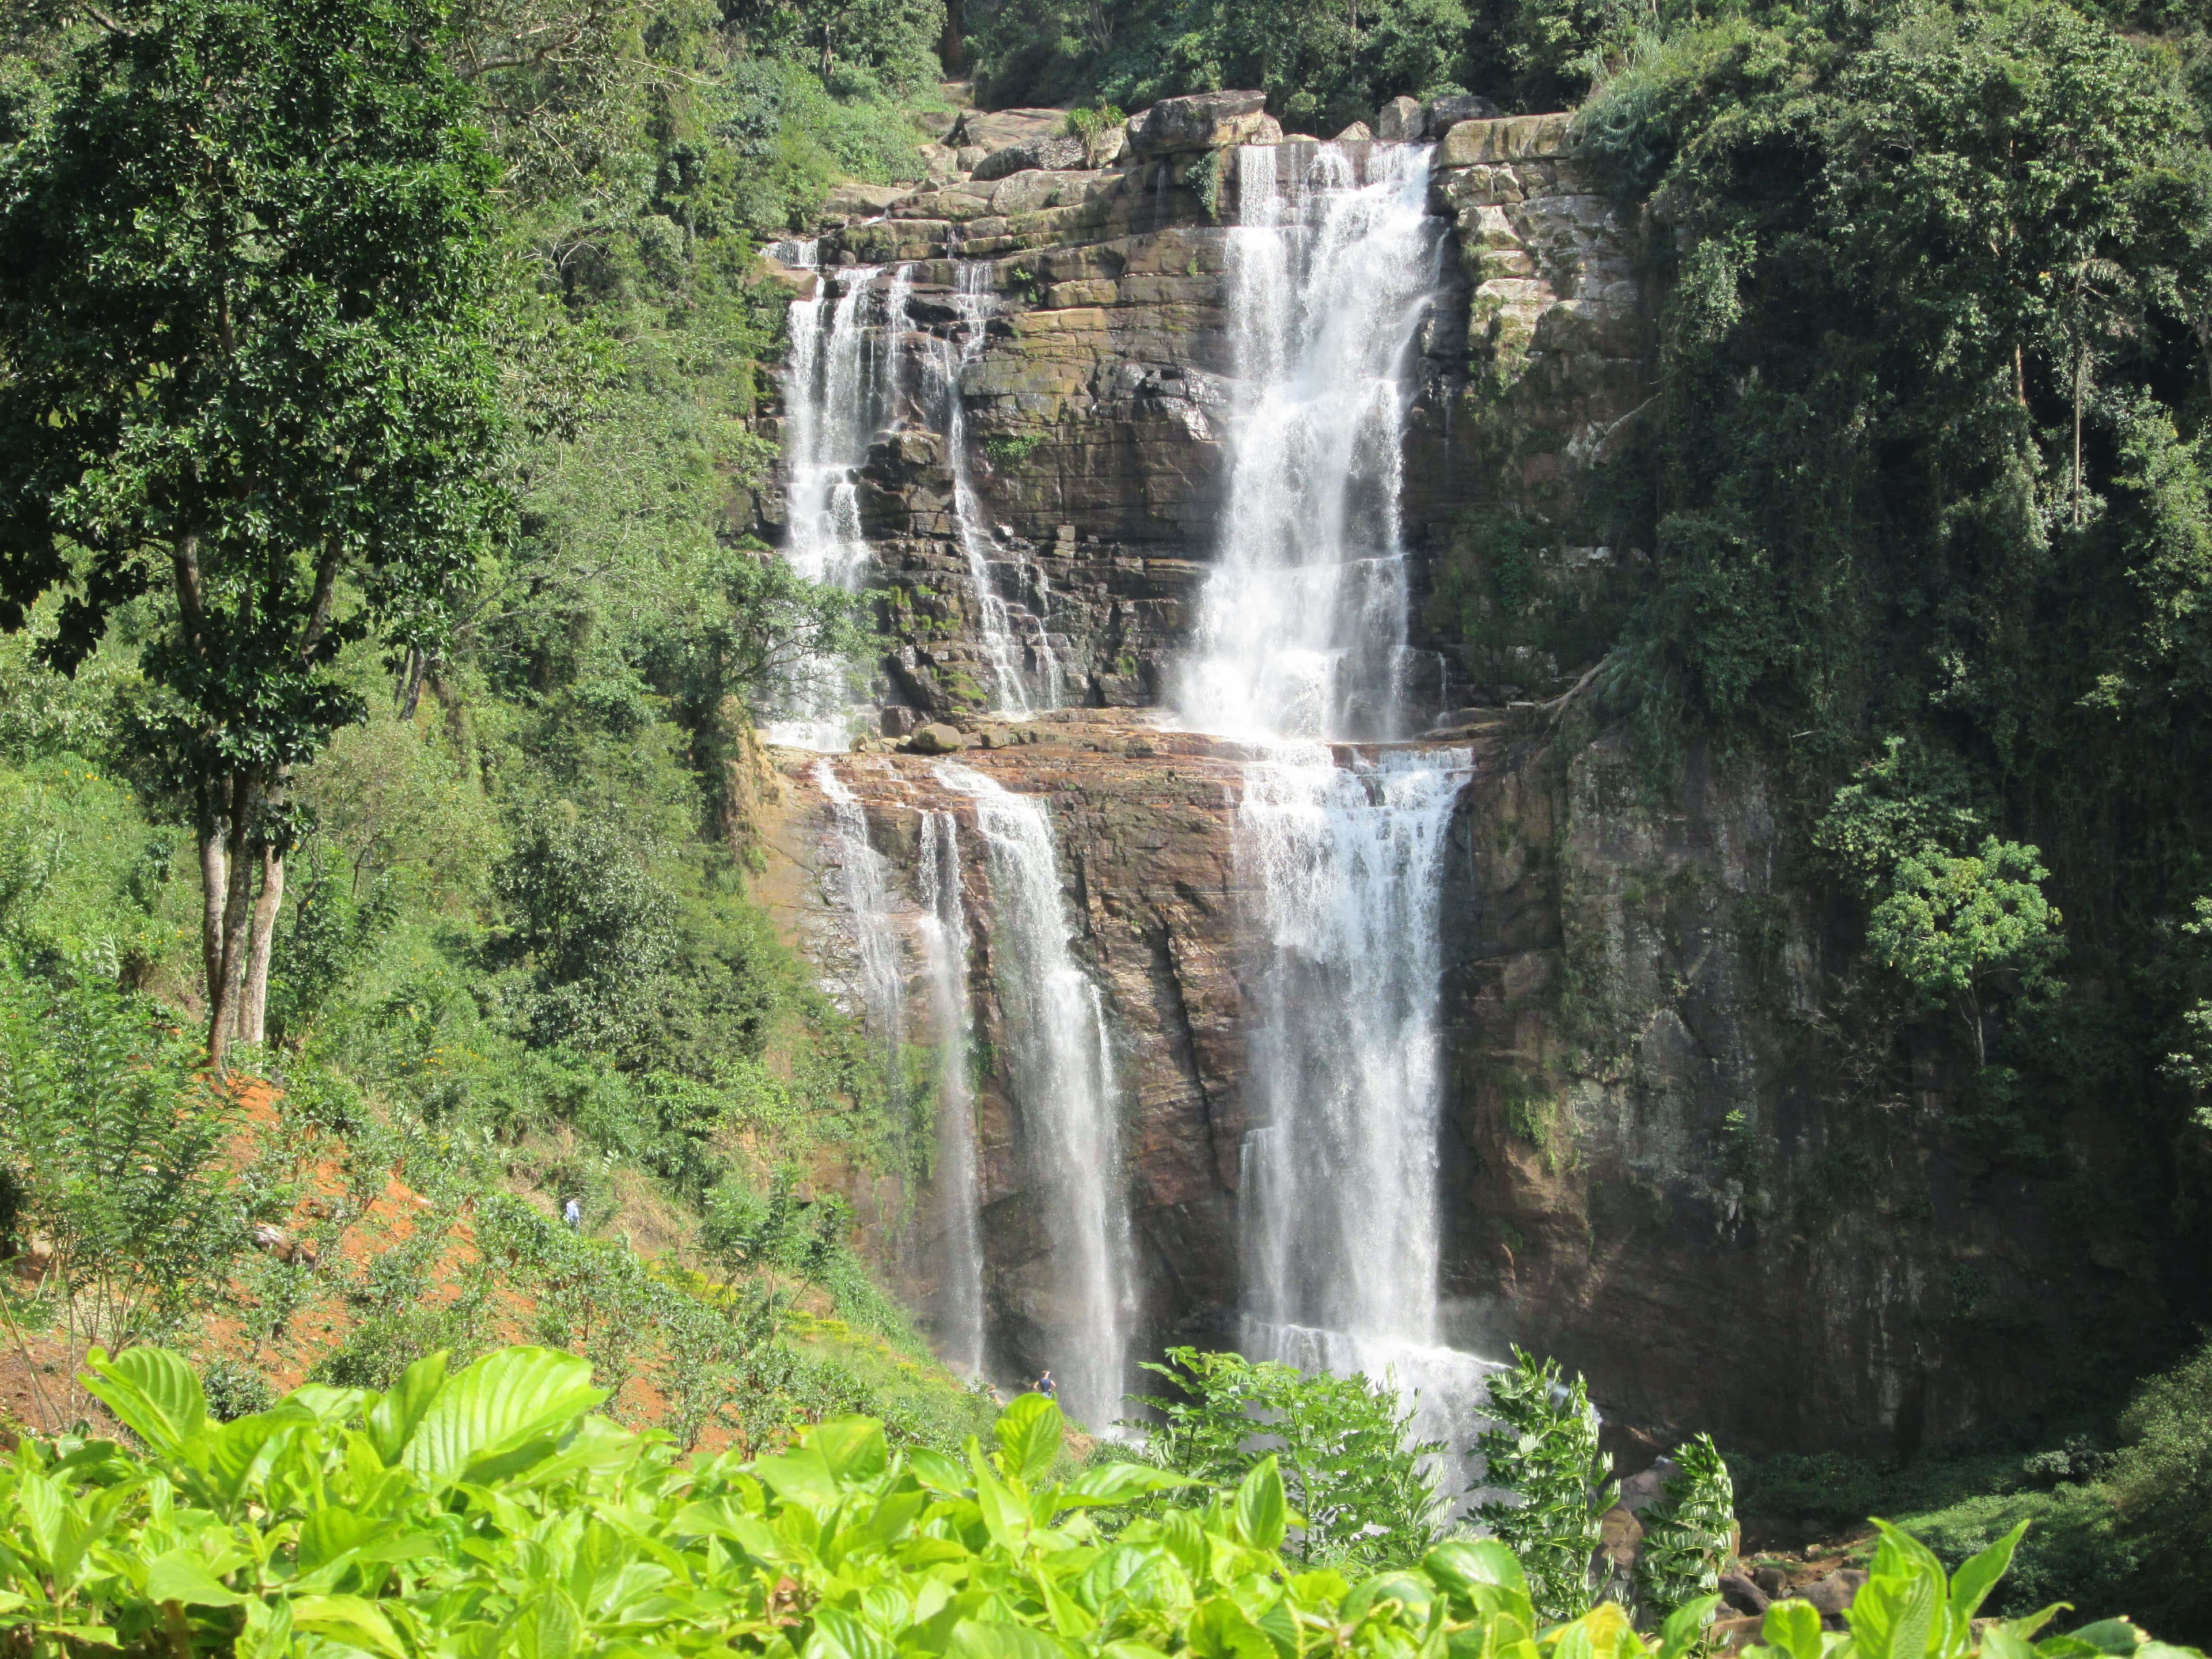 A photo of picturesque Ramboda falls situated in Nuwara Eliya Sri Lanka